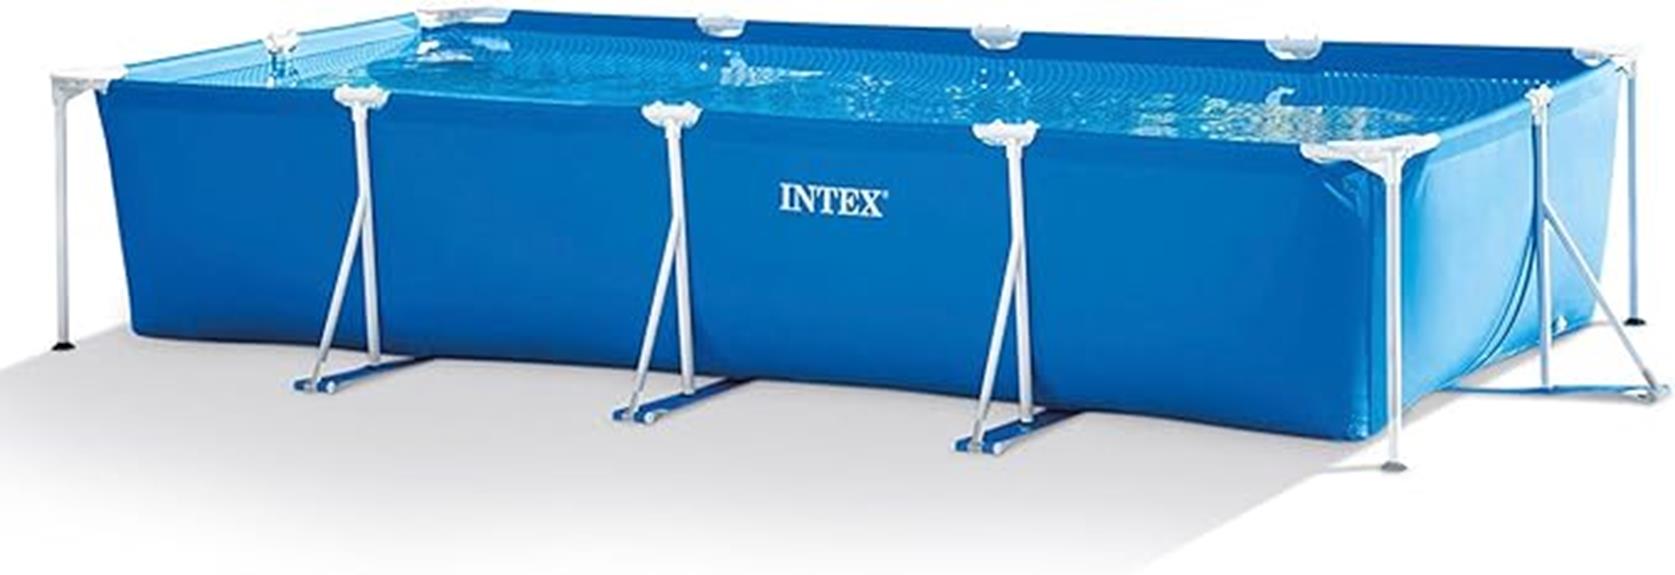 intex blue rectangular above ground pool